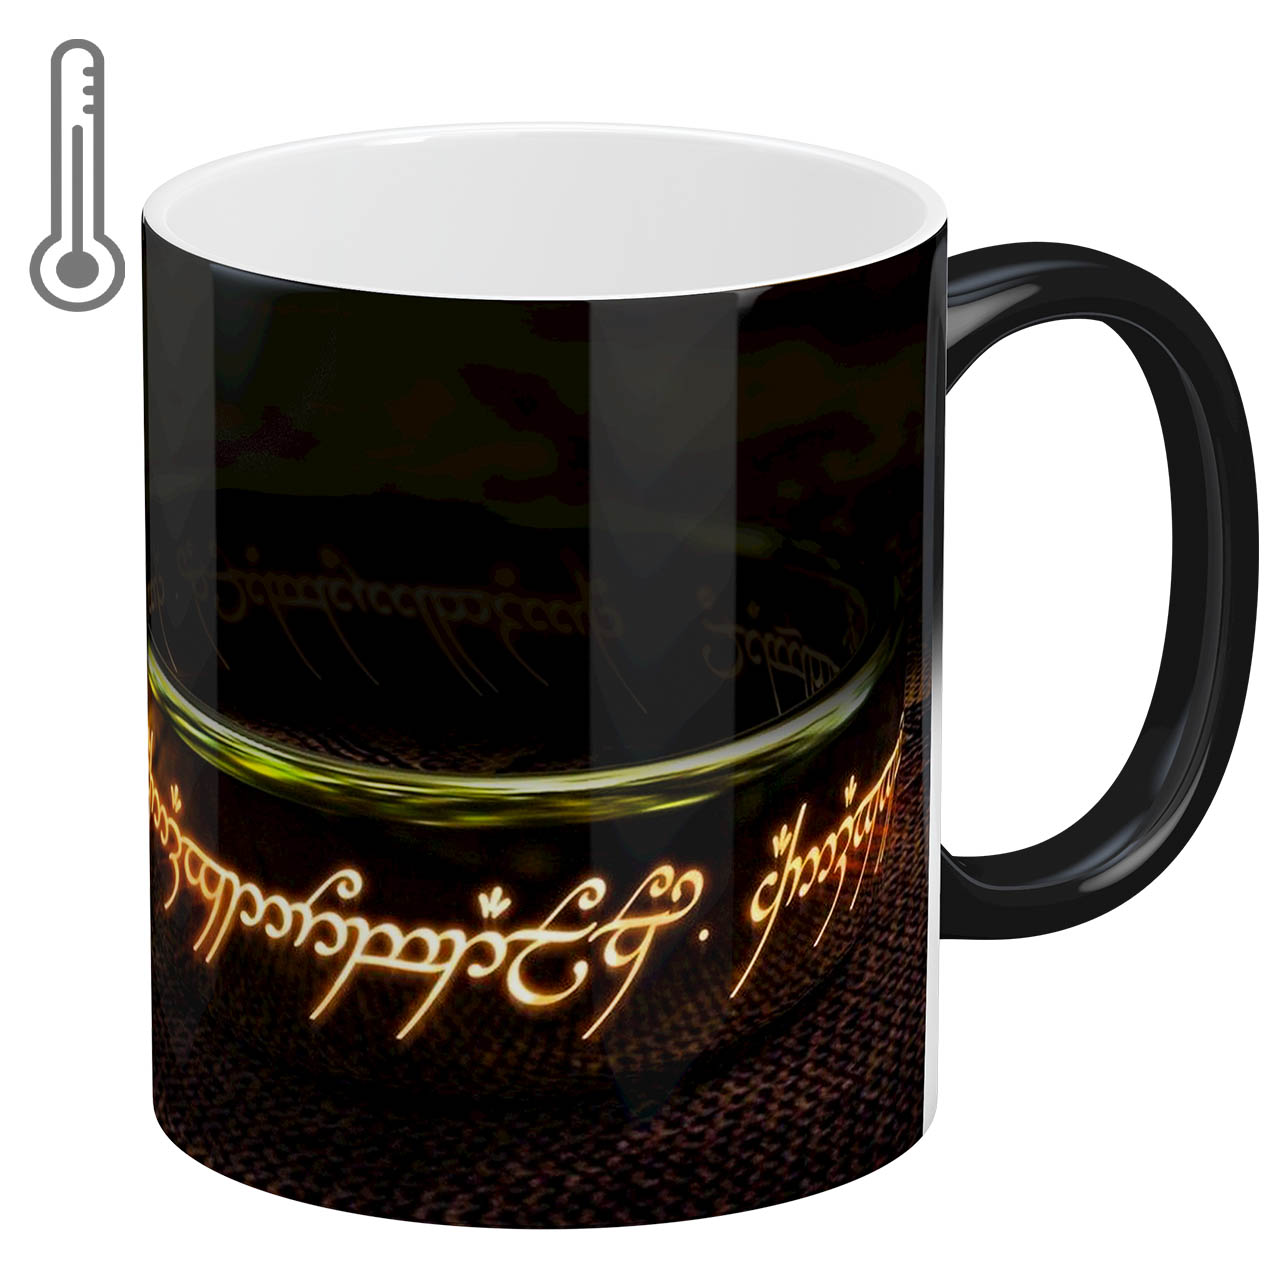 آنباکس ماگ حرارتی آبنبات رنگی طرح The Lord of the Rings کد ARM0627 توسط محمدرضا آذرافشان در تاریخ ۰۹ شهریور ۱۳۹۹